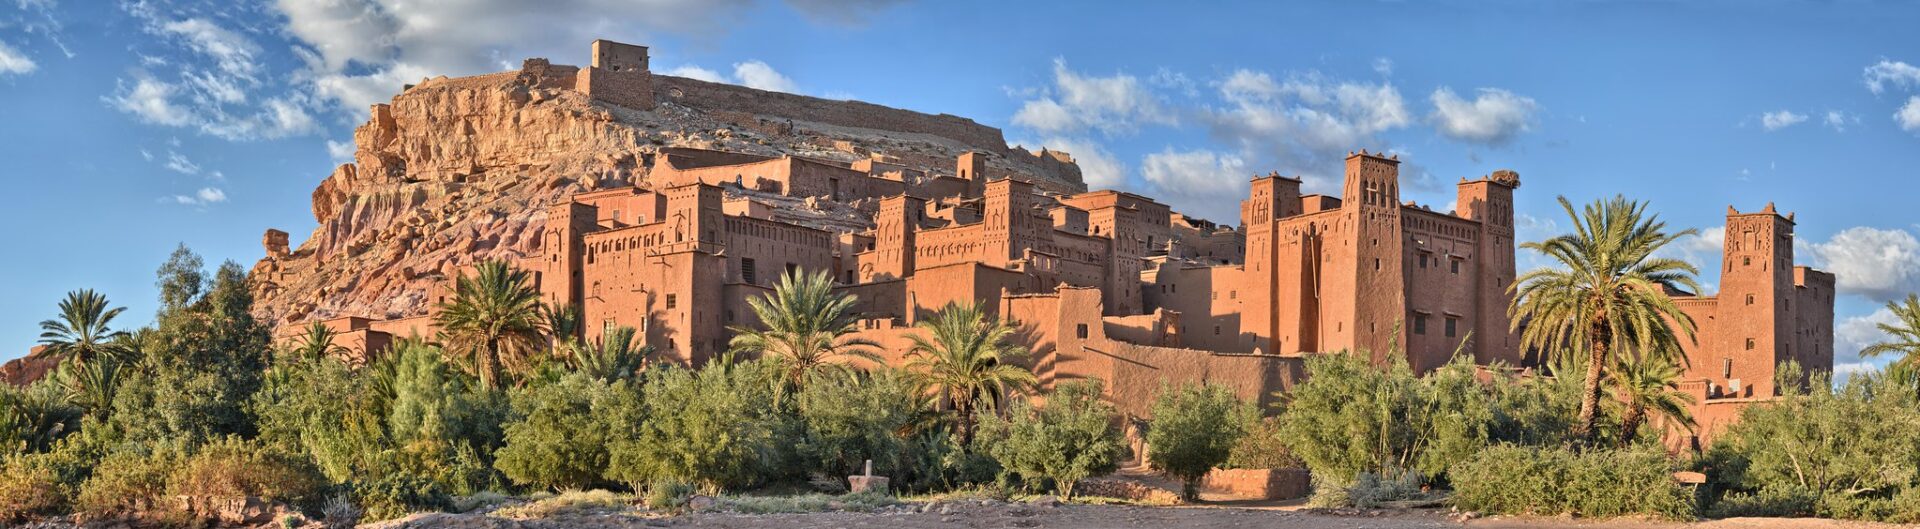 Day Trip to Ouarzazate & Ait Benhaddou from Marrakech